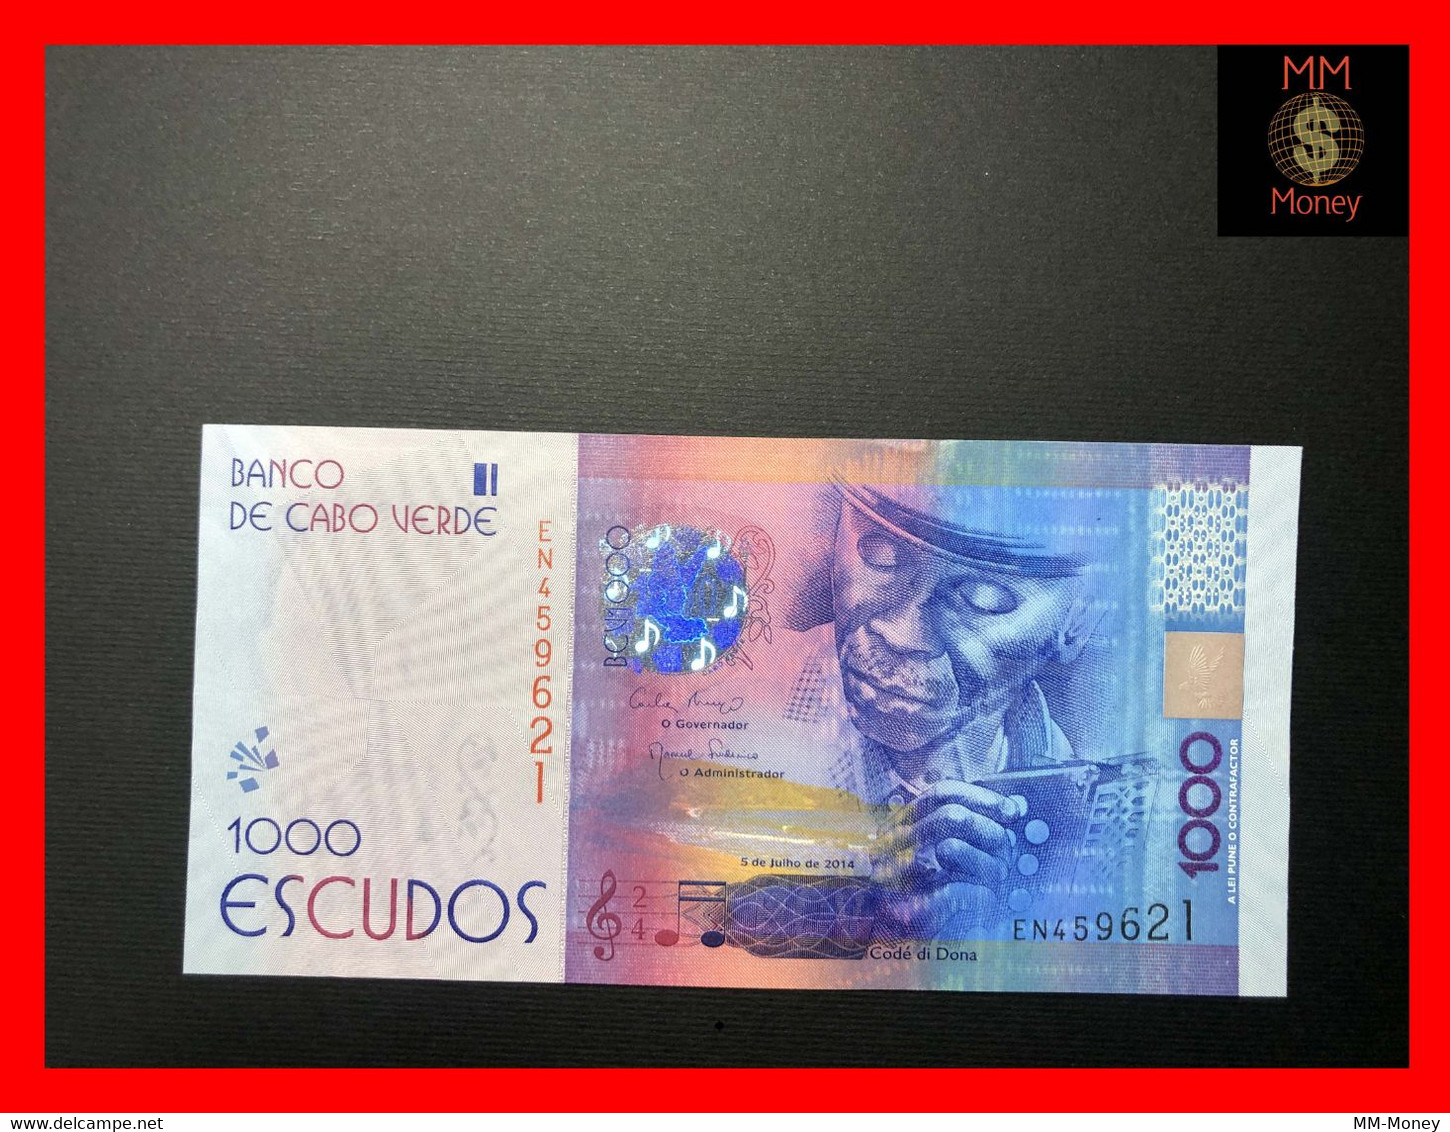 CAPE VERDE 1.000 1000 Escudos  5.7.2014  P. 73  UNC  [MM-Money] - Cap Verde